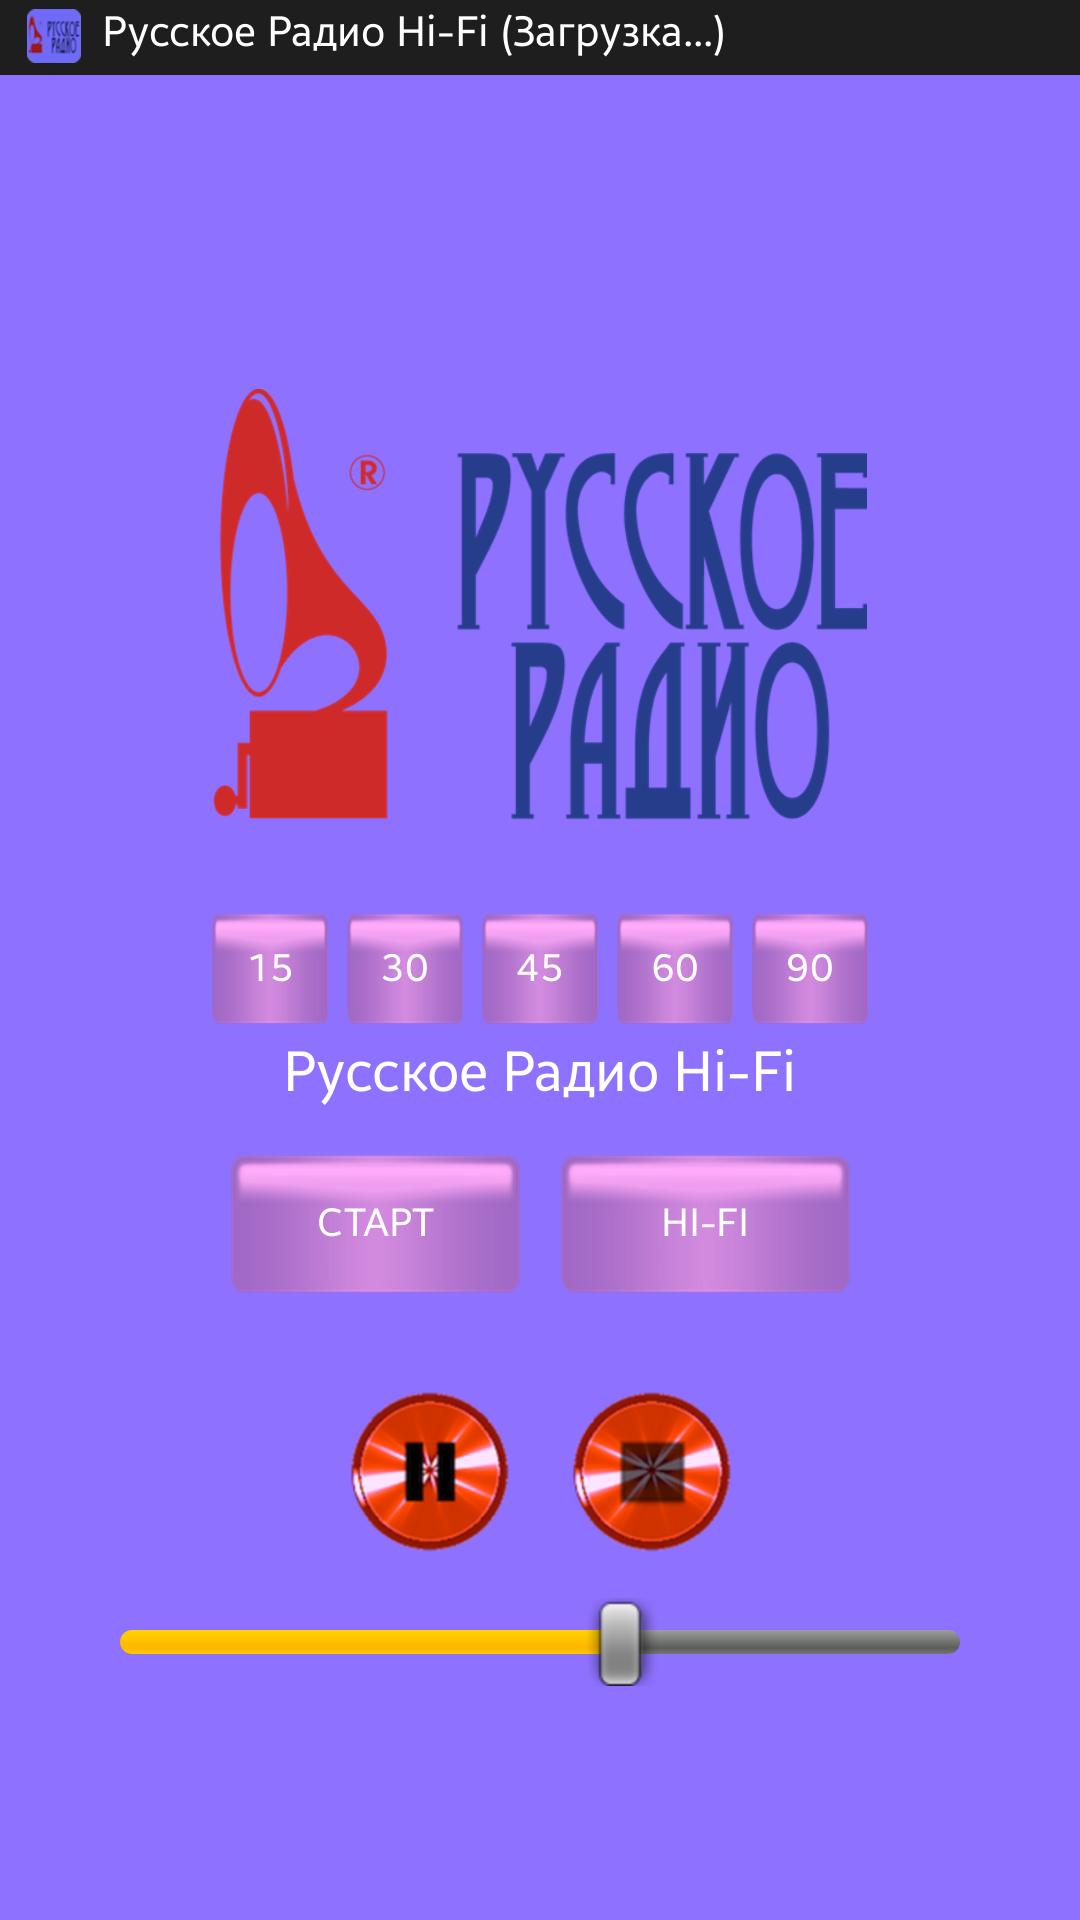 RUSSKOE RADIO FM HI-FI for Android - APK Download